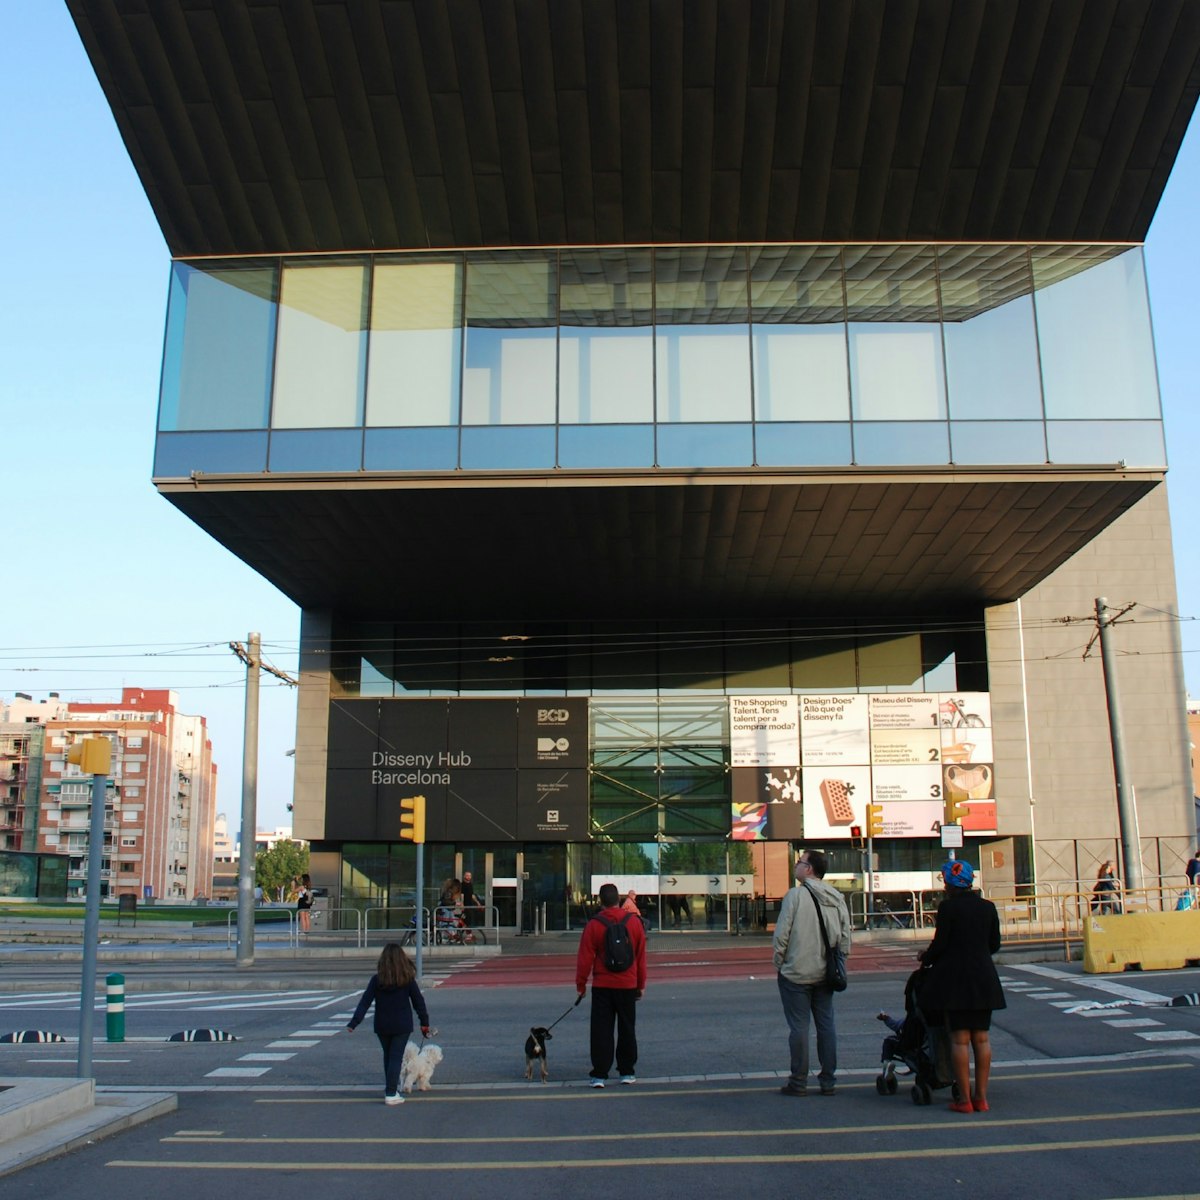 Entrance of Museu Disseny